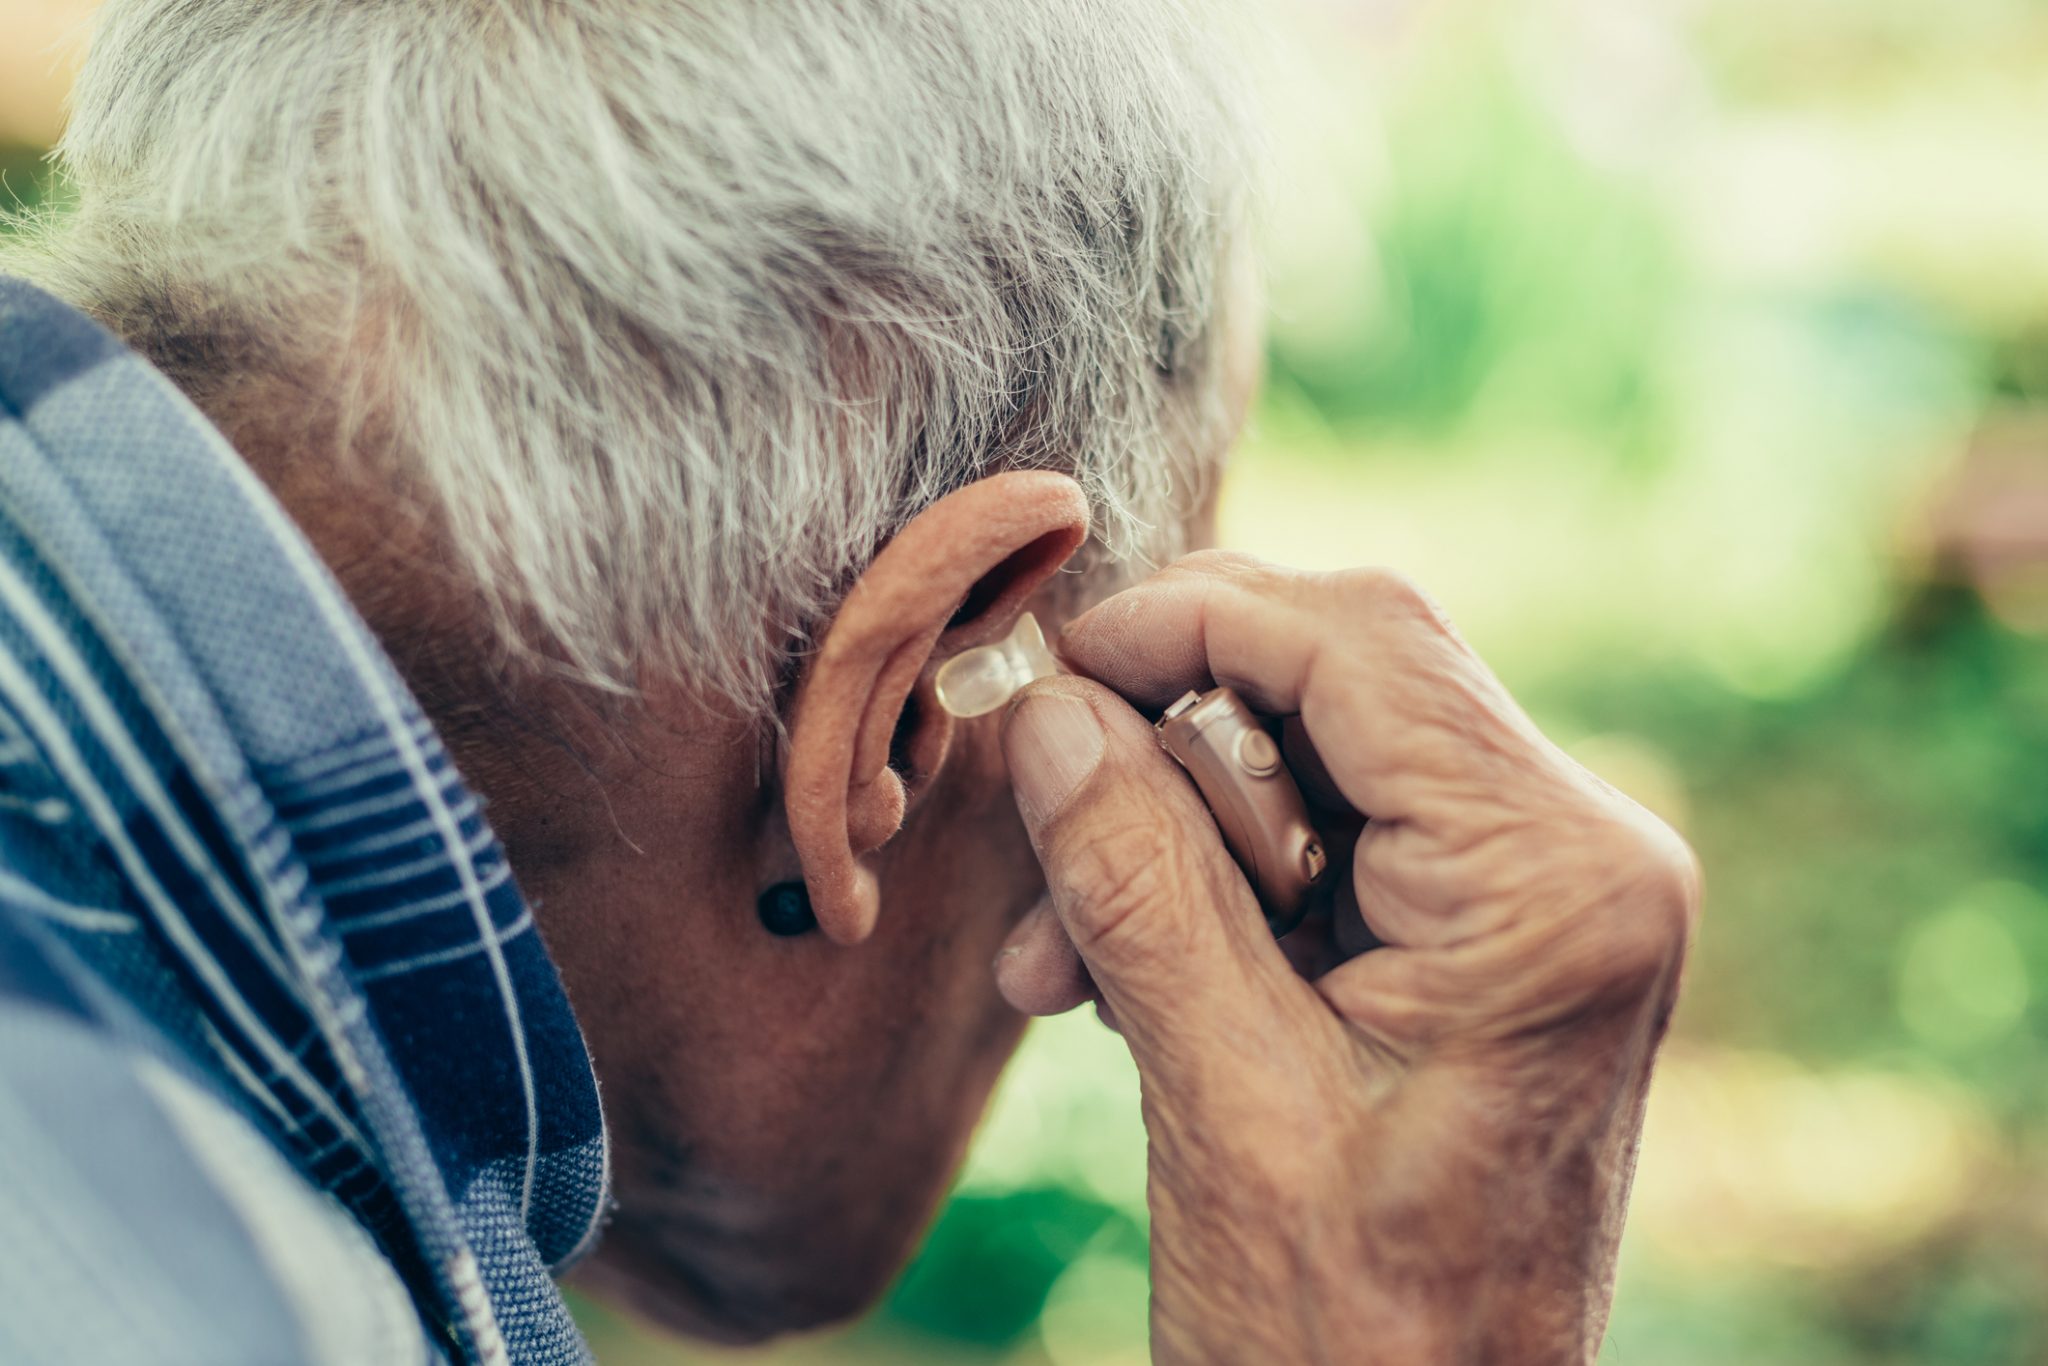 Man placing hearing aid in ear